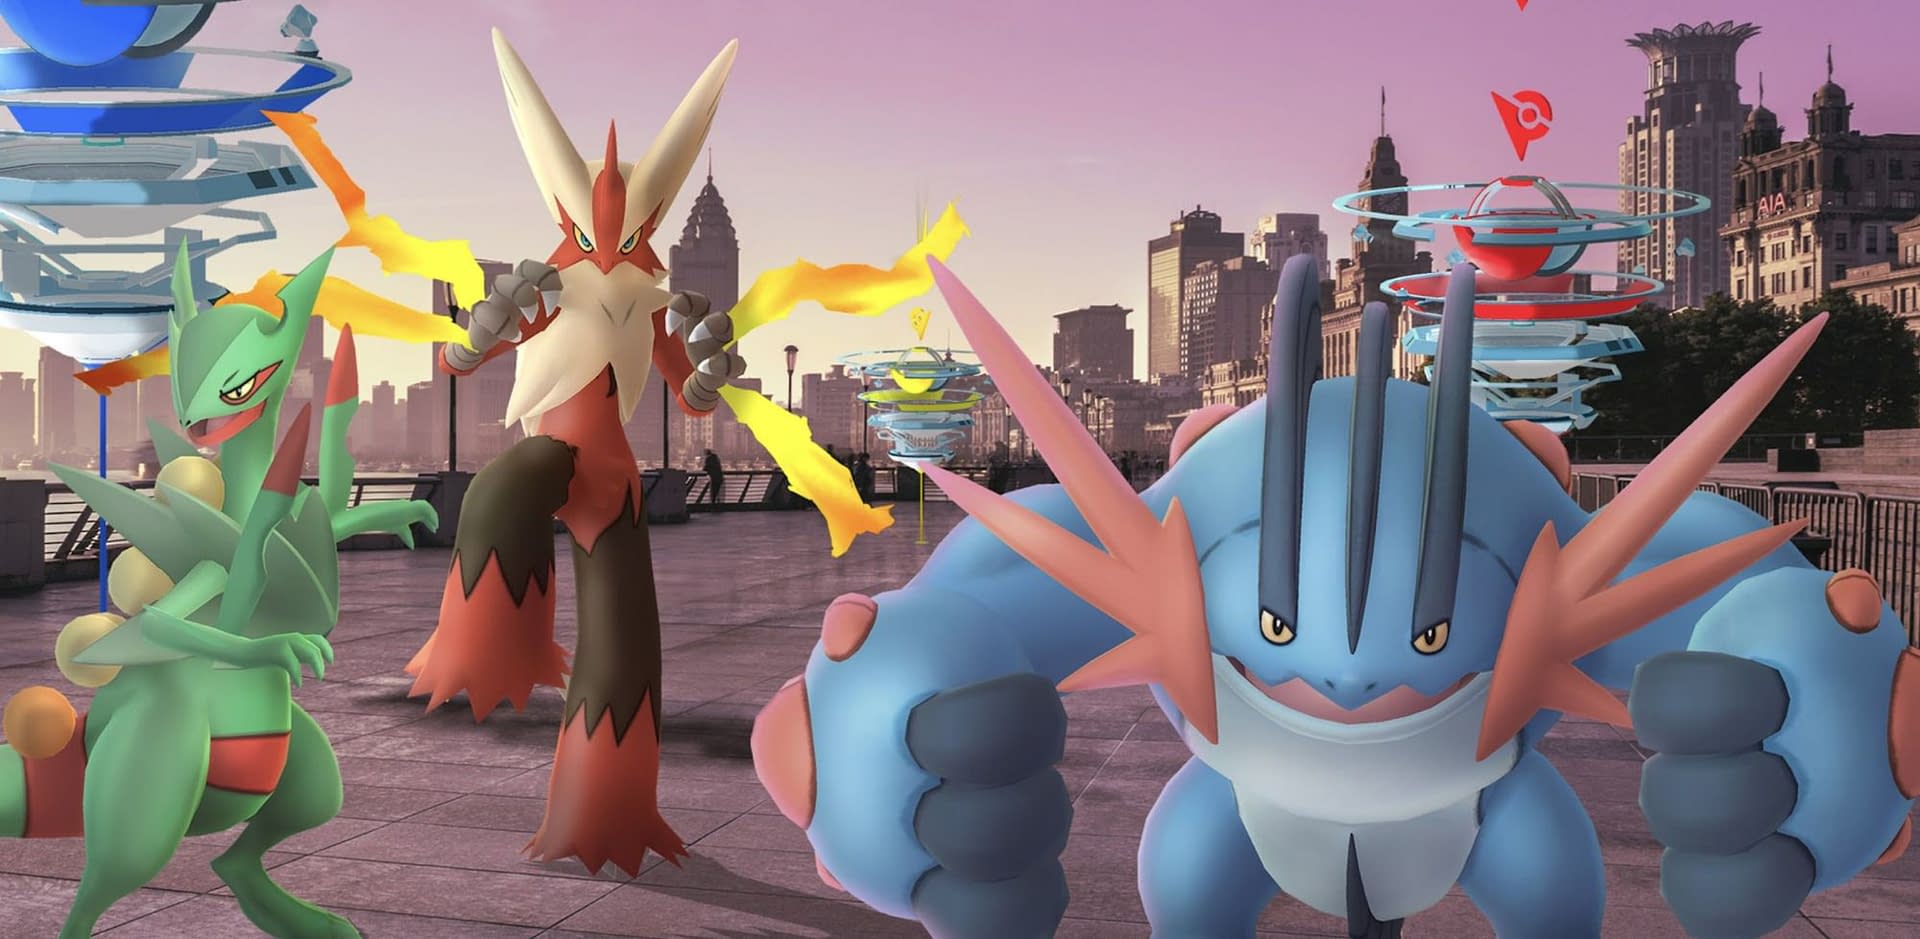 How To Defeat The Mega Gardevoir Raid In Pokemon Go